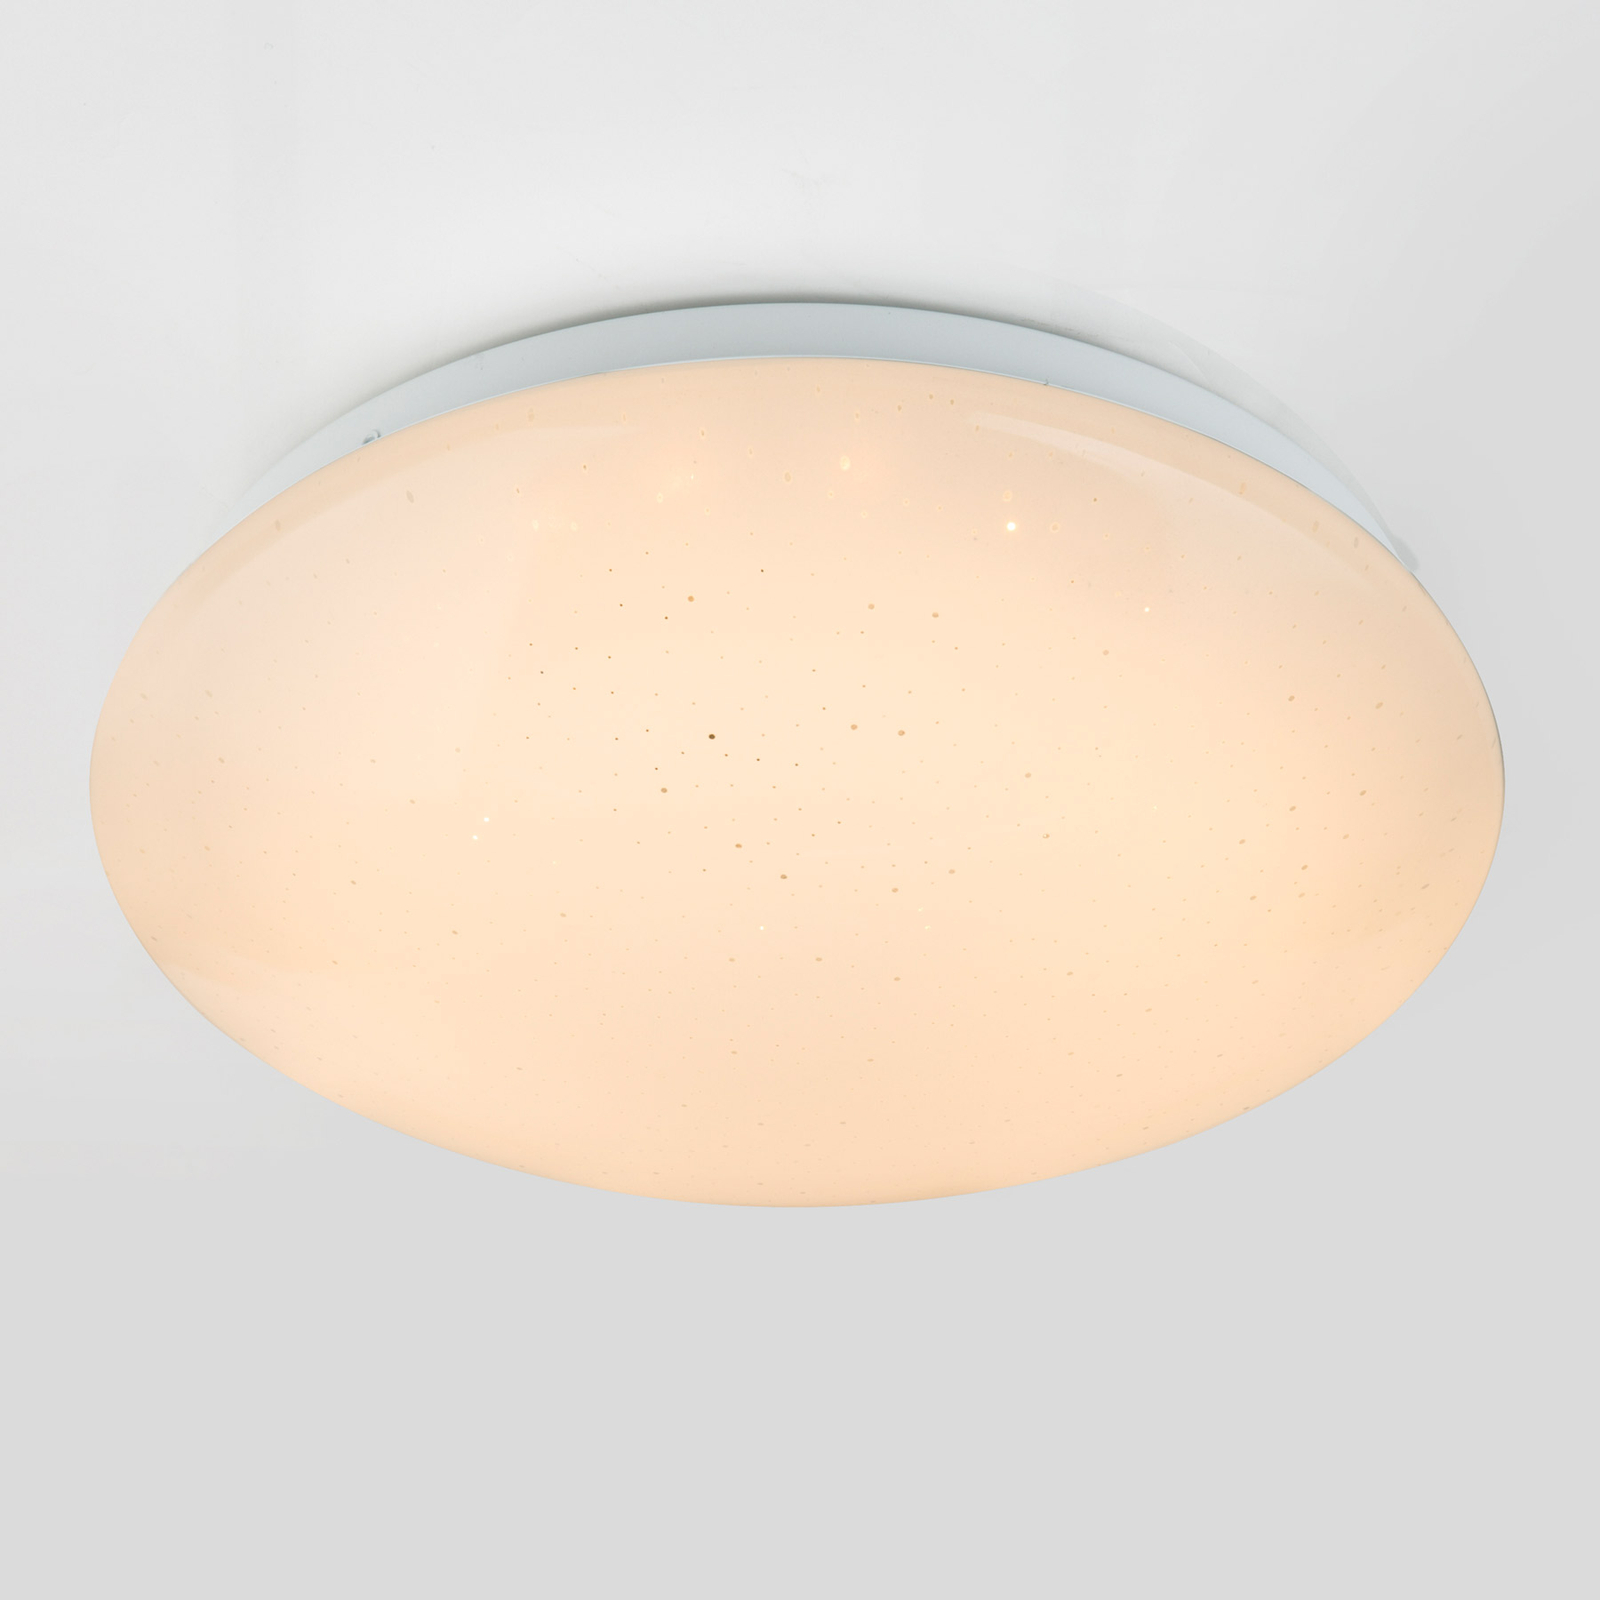 LED-taklampe Atreju I, RGBW, dimbar, Ø 29 cm